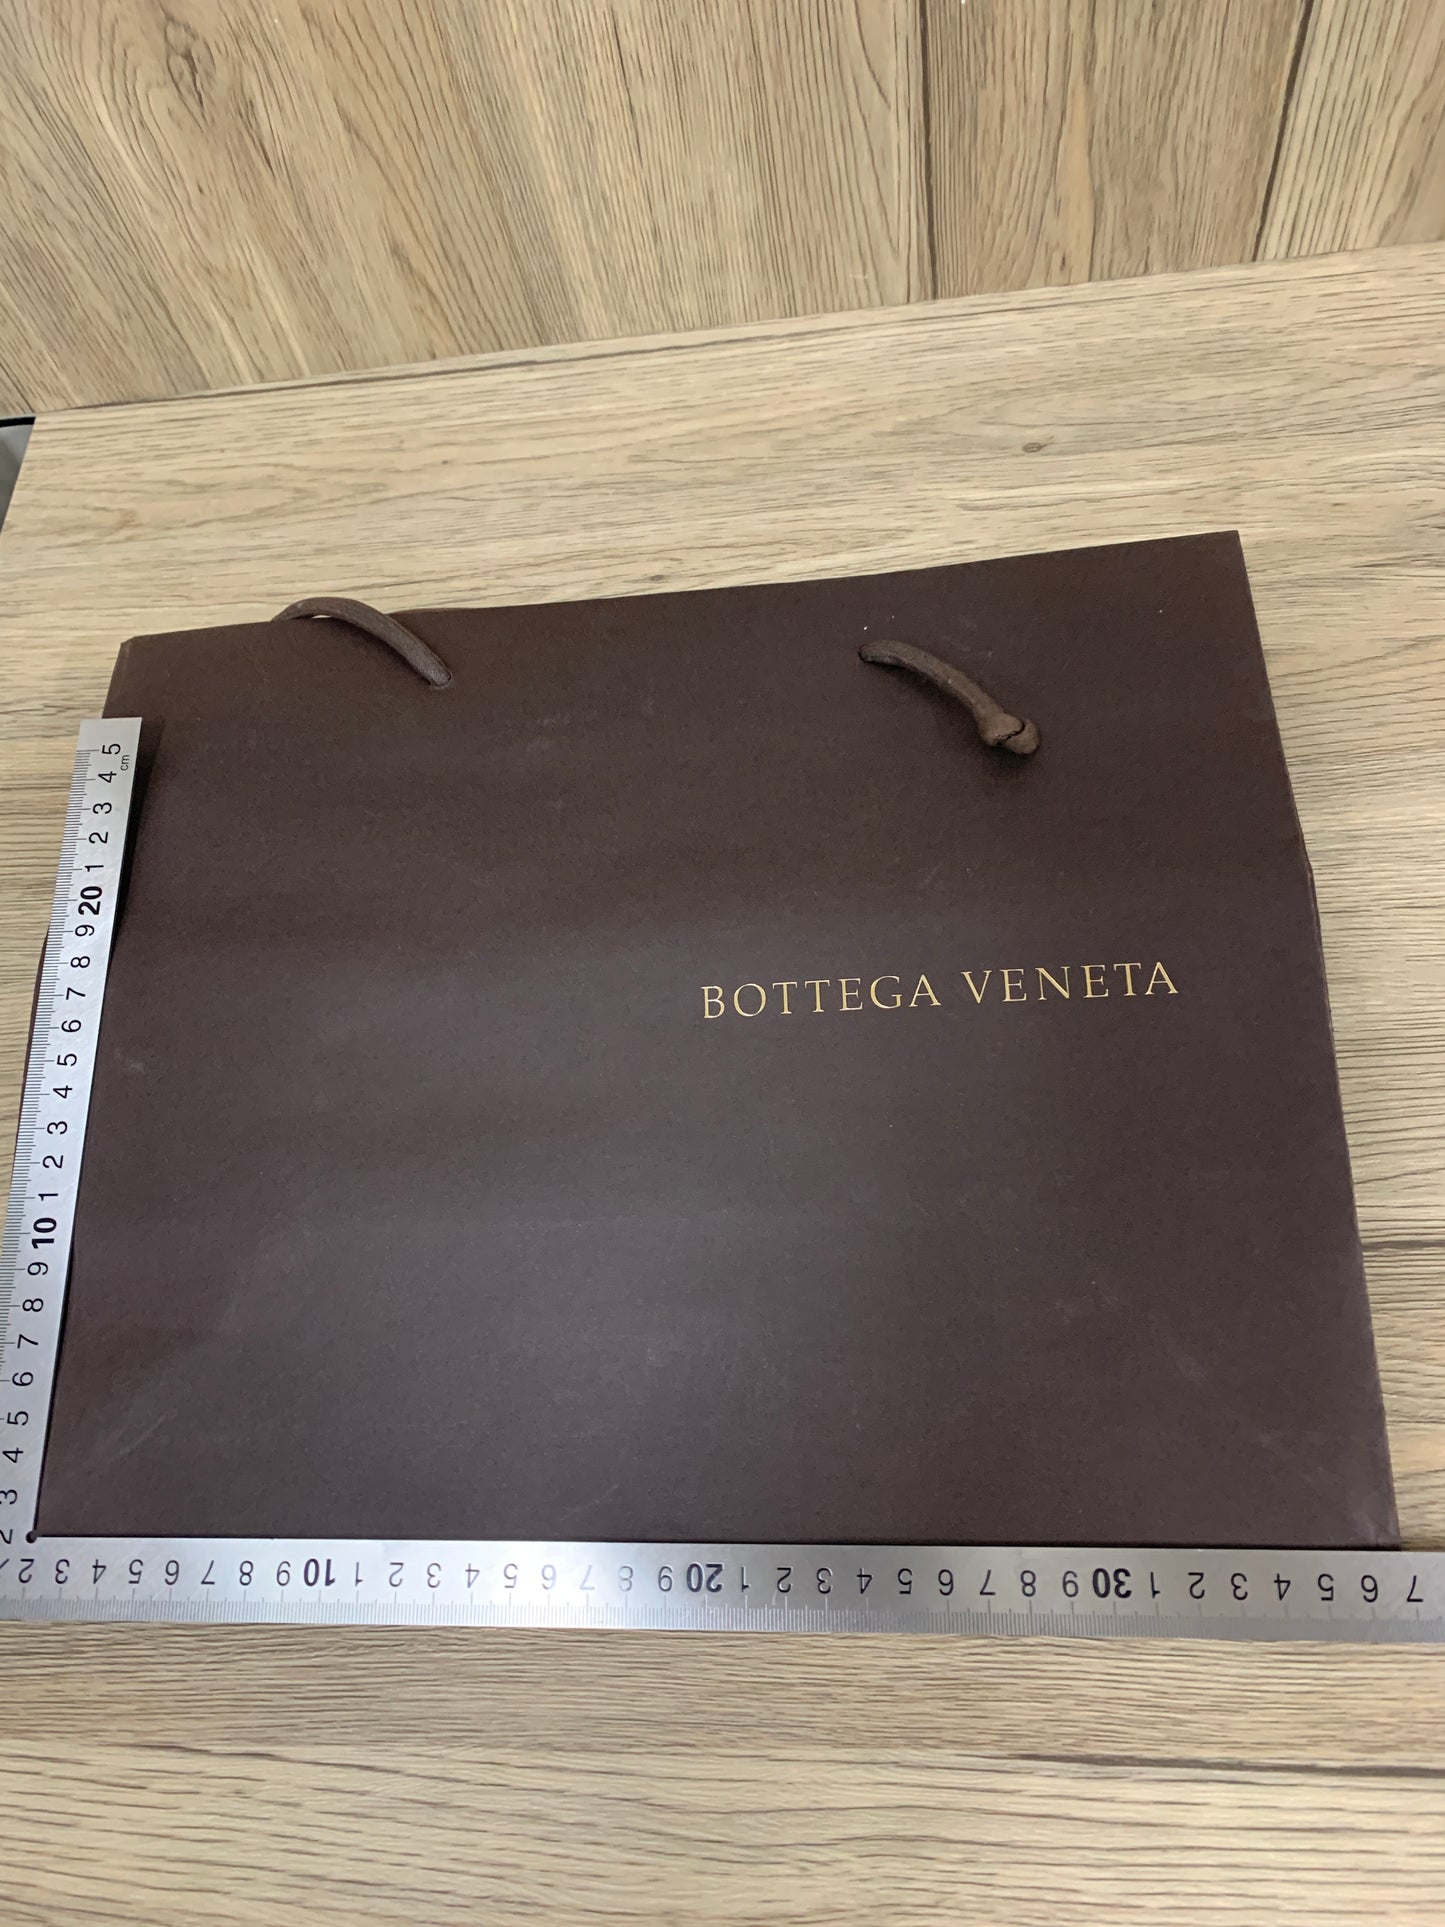 Authentic Bottega veneta bv paper bag x 3 set  brown for gift wallet cosmetic handbag